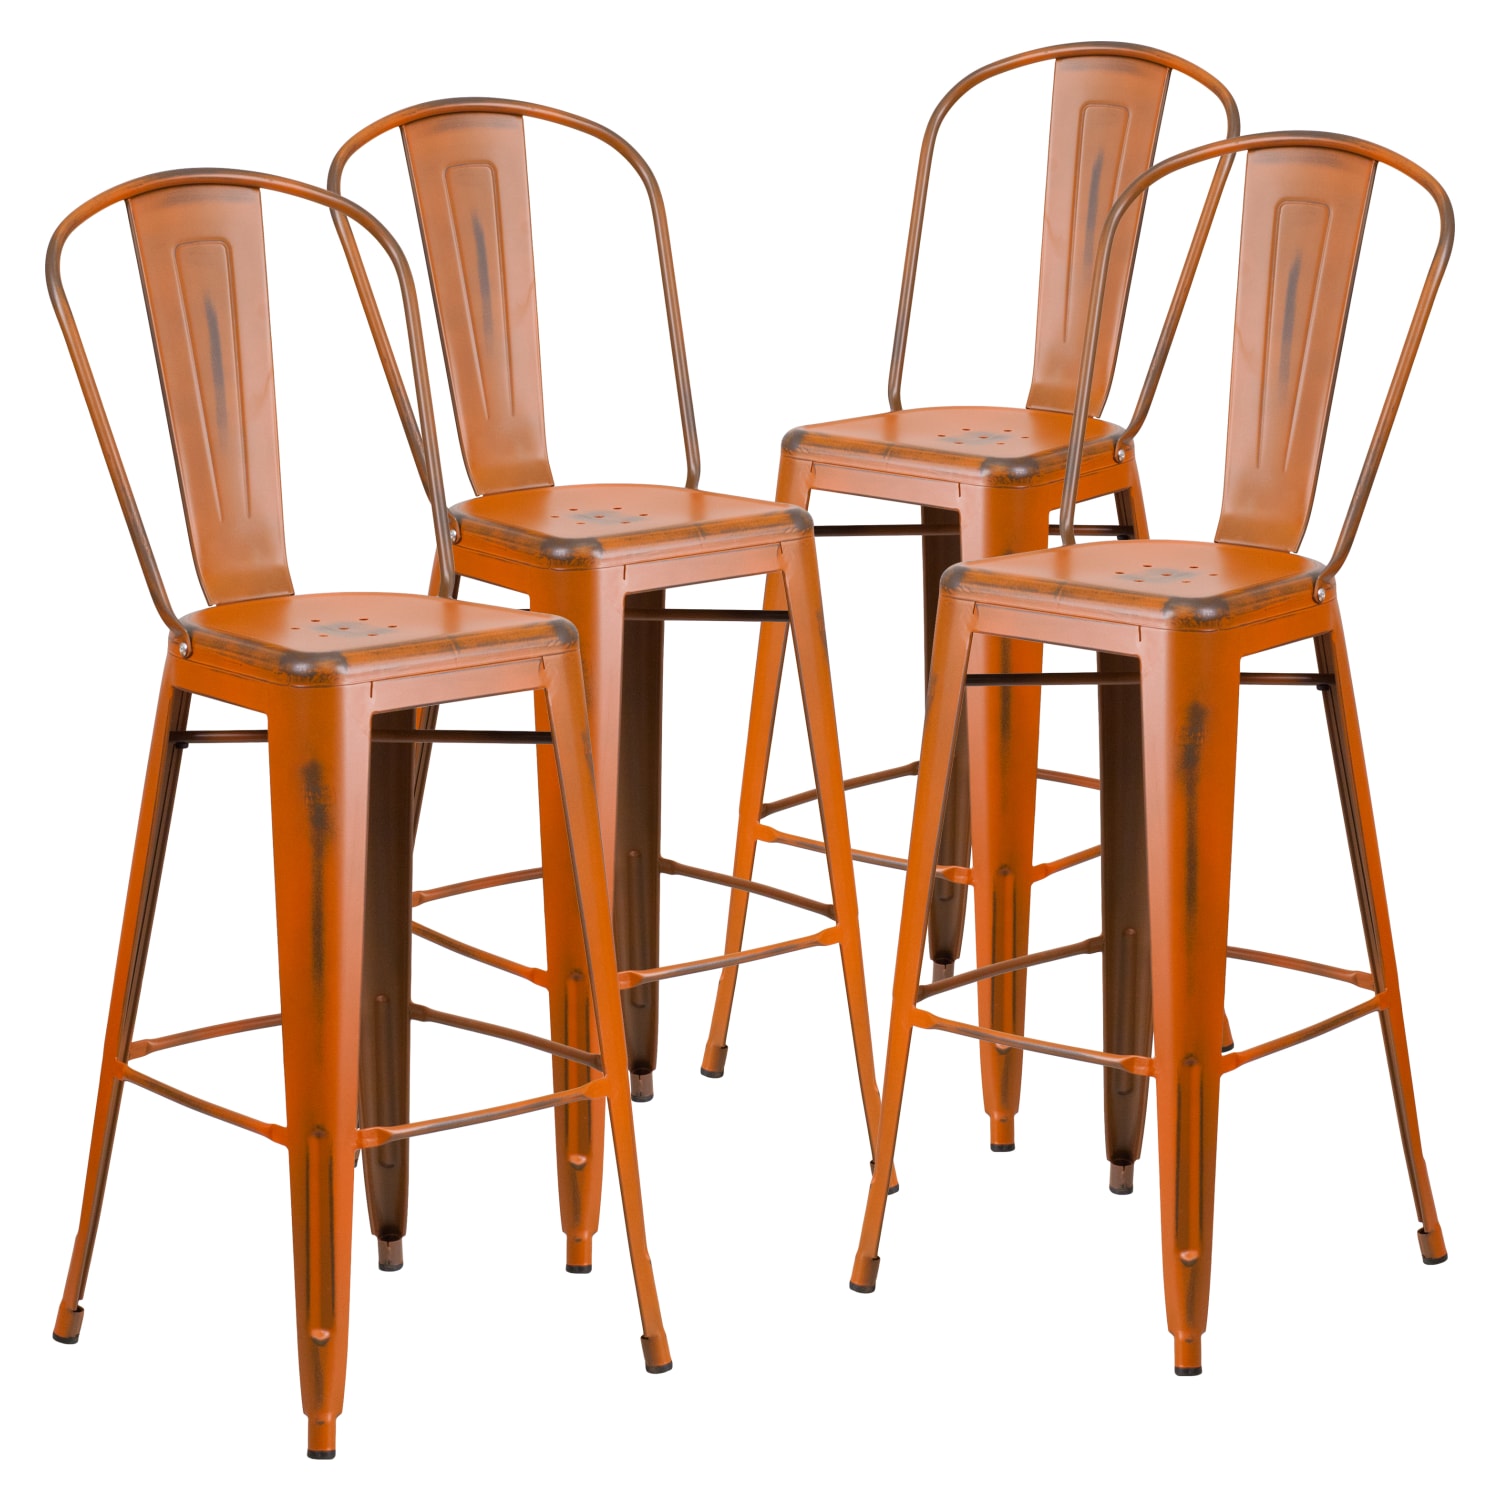 4 Pack 30” High Distressed Orange Metal Indoor-Outdoor Barstool with Back